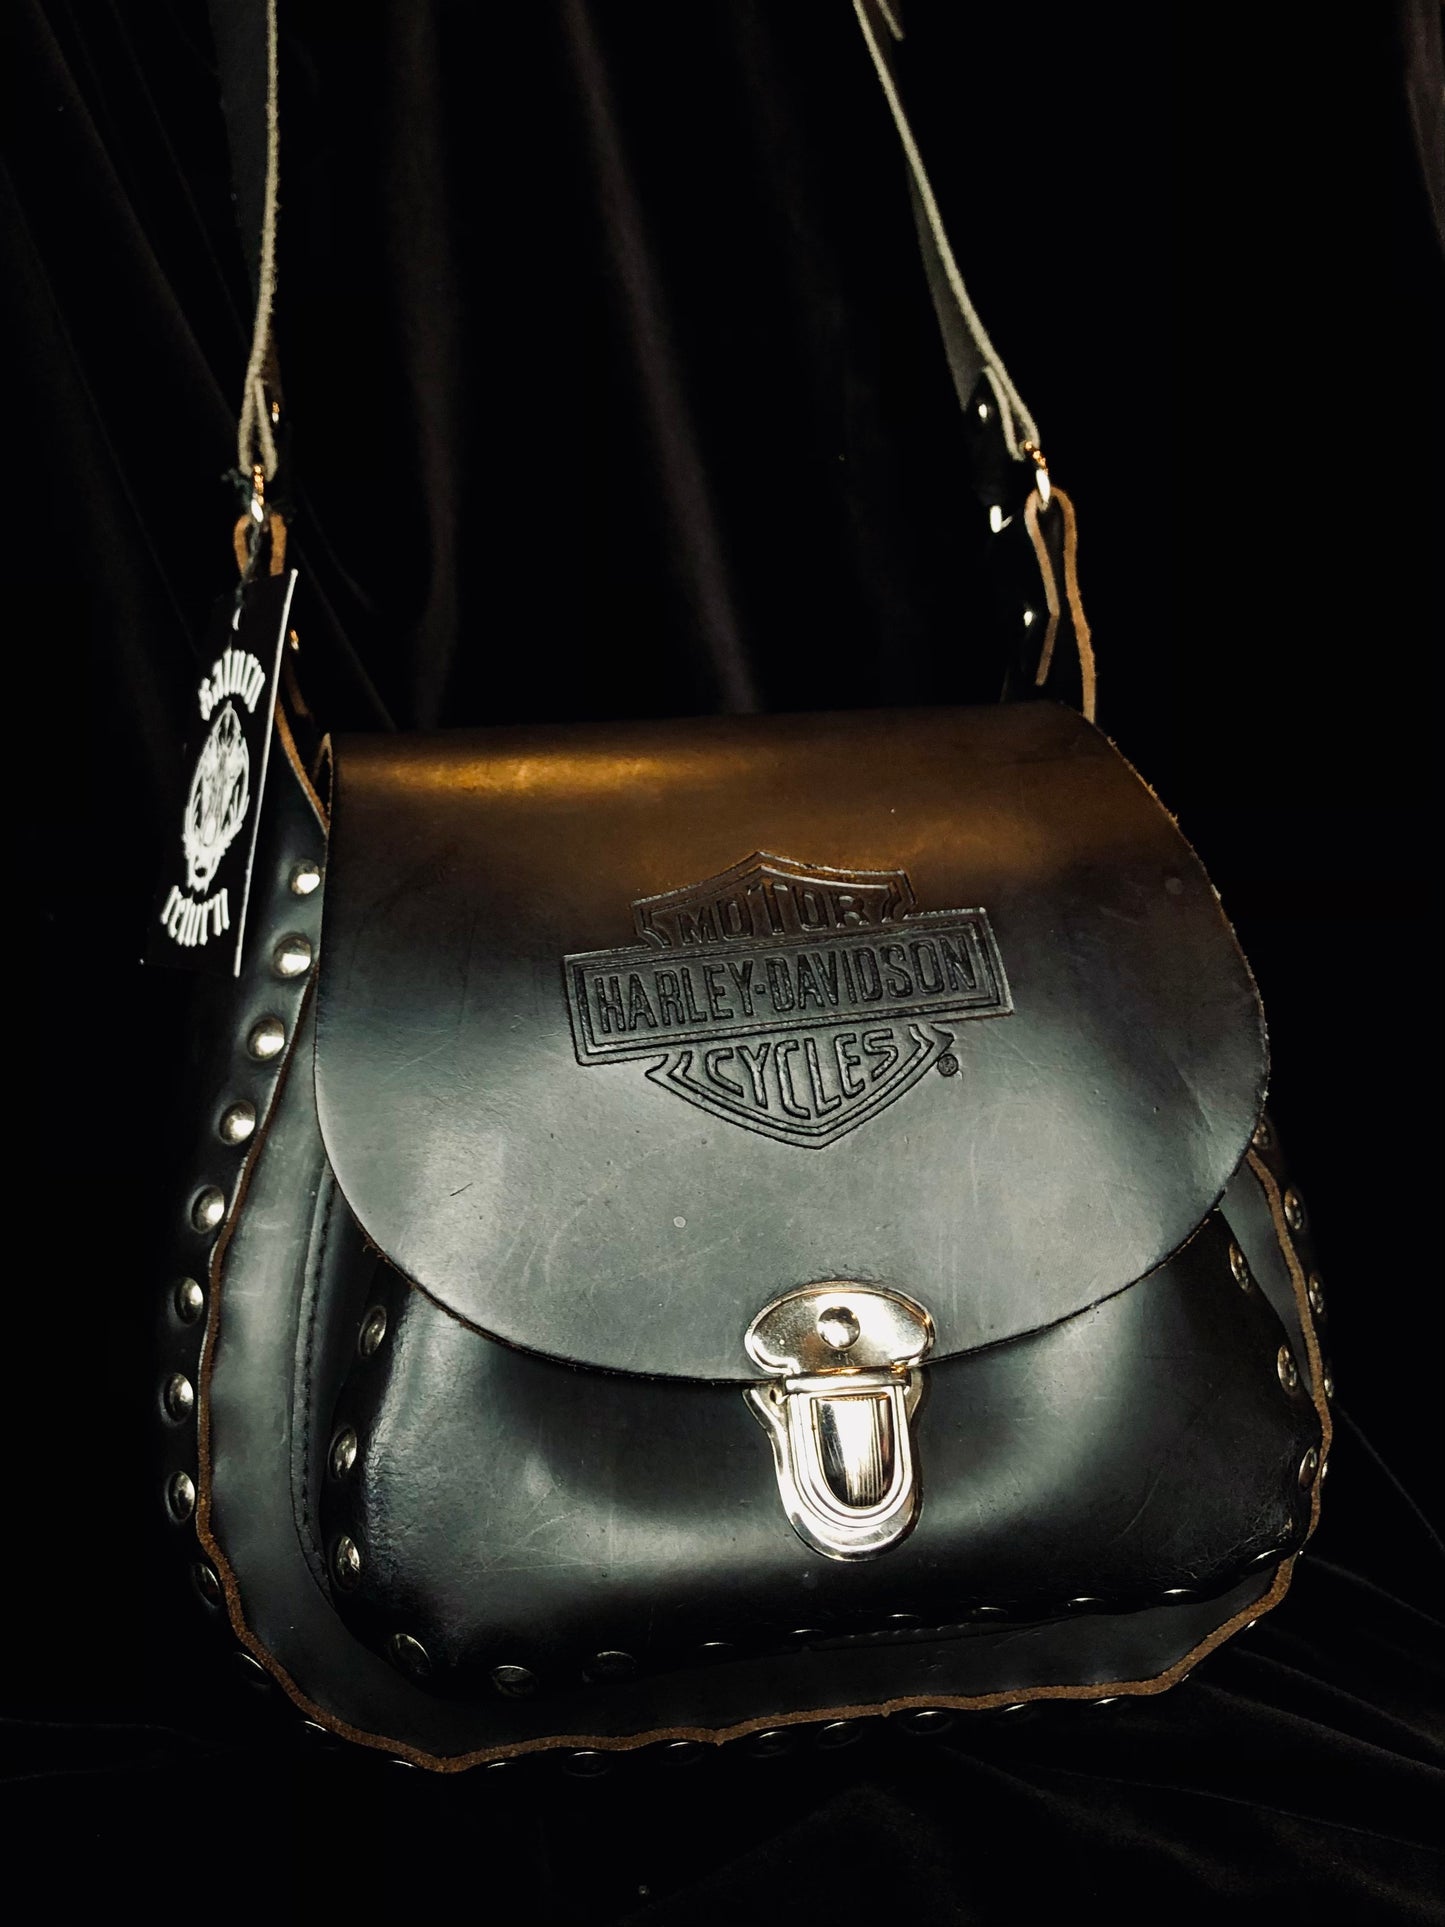 Harley Davidson saddle bag